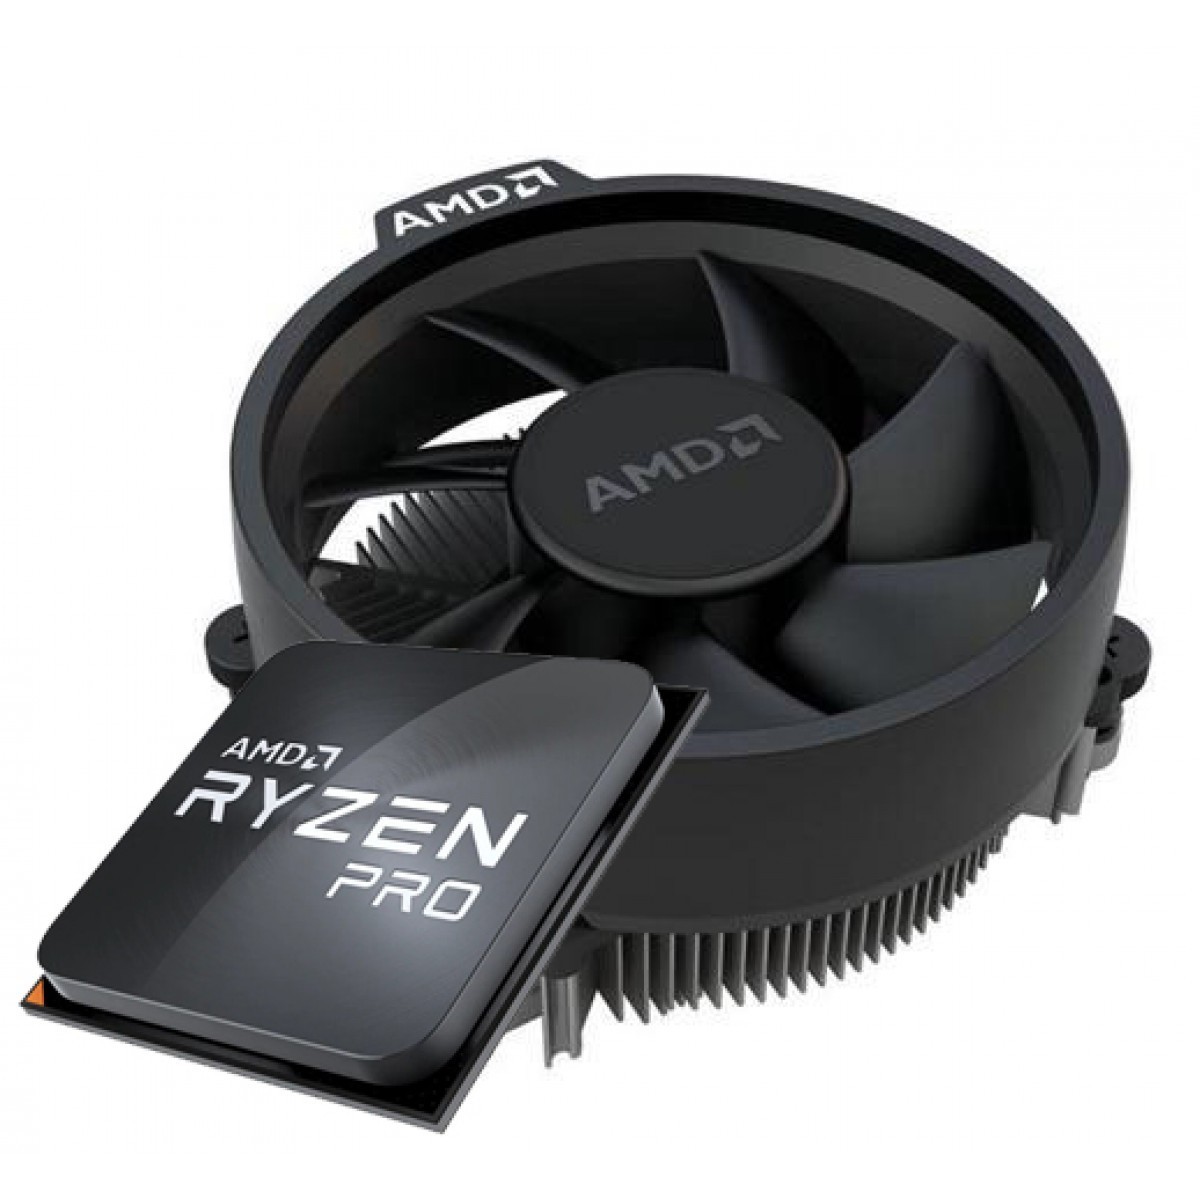 Kit Upgrade AMD Ryzen 5 PRO 4650GE + Gigabyte B450 Aorus Elite V2